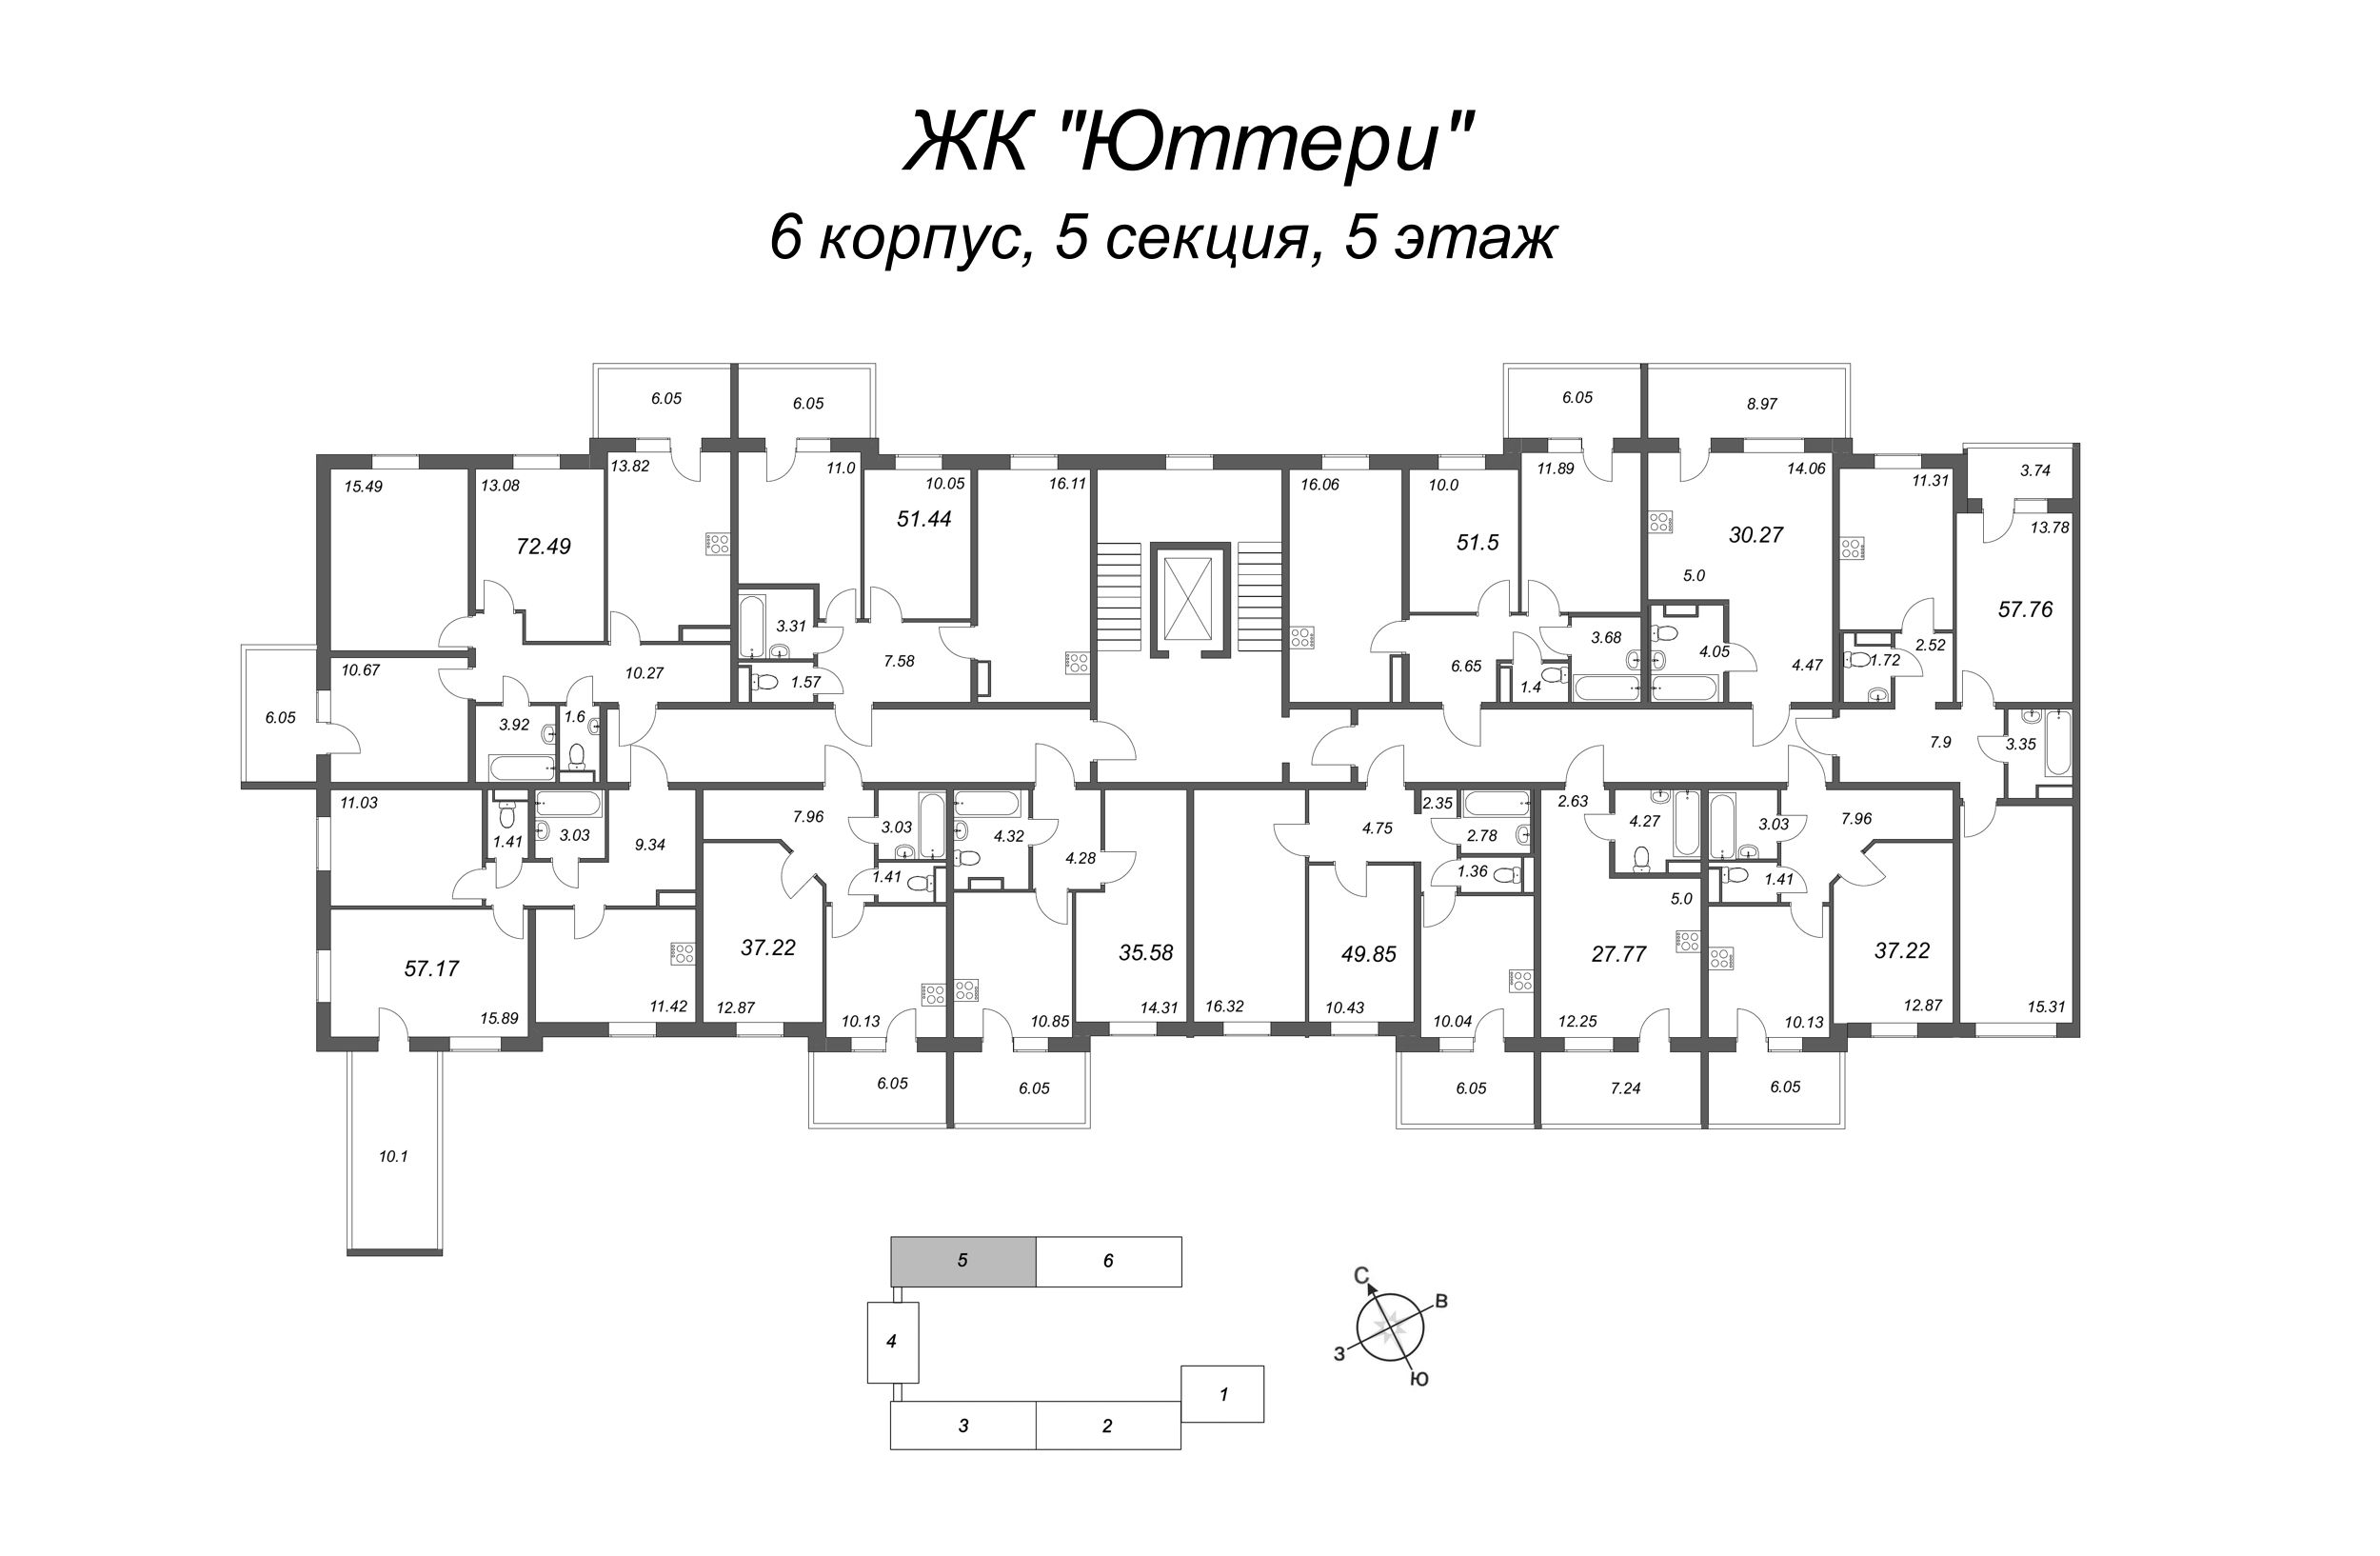 3-комнатная (Евро) квартира, 49.68 м² - планировка этажа